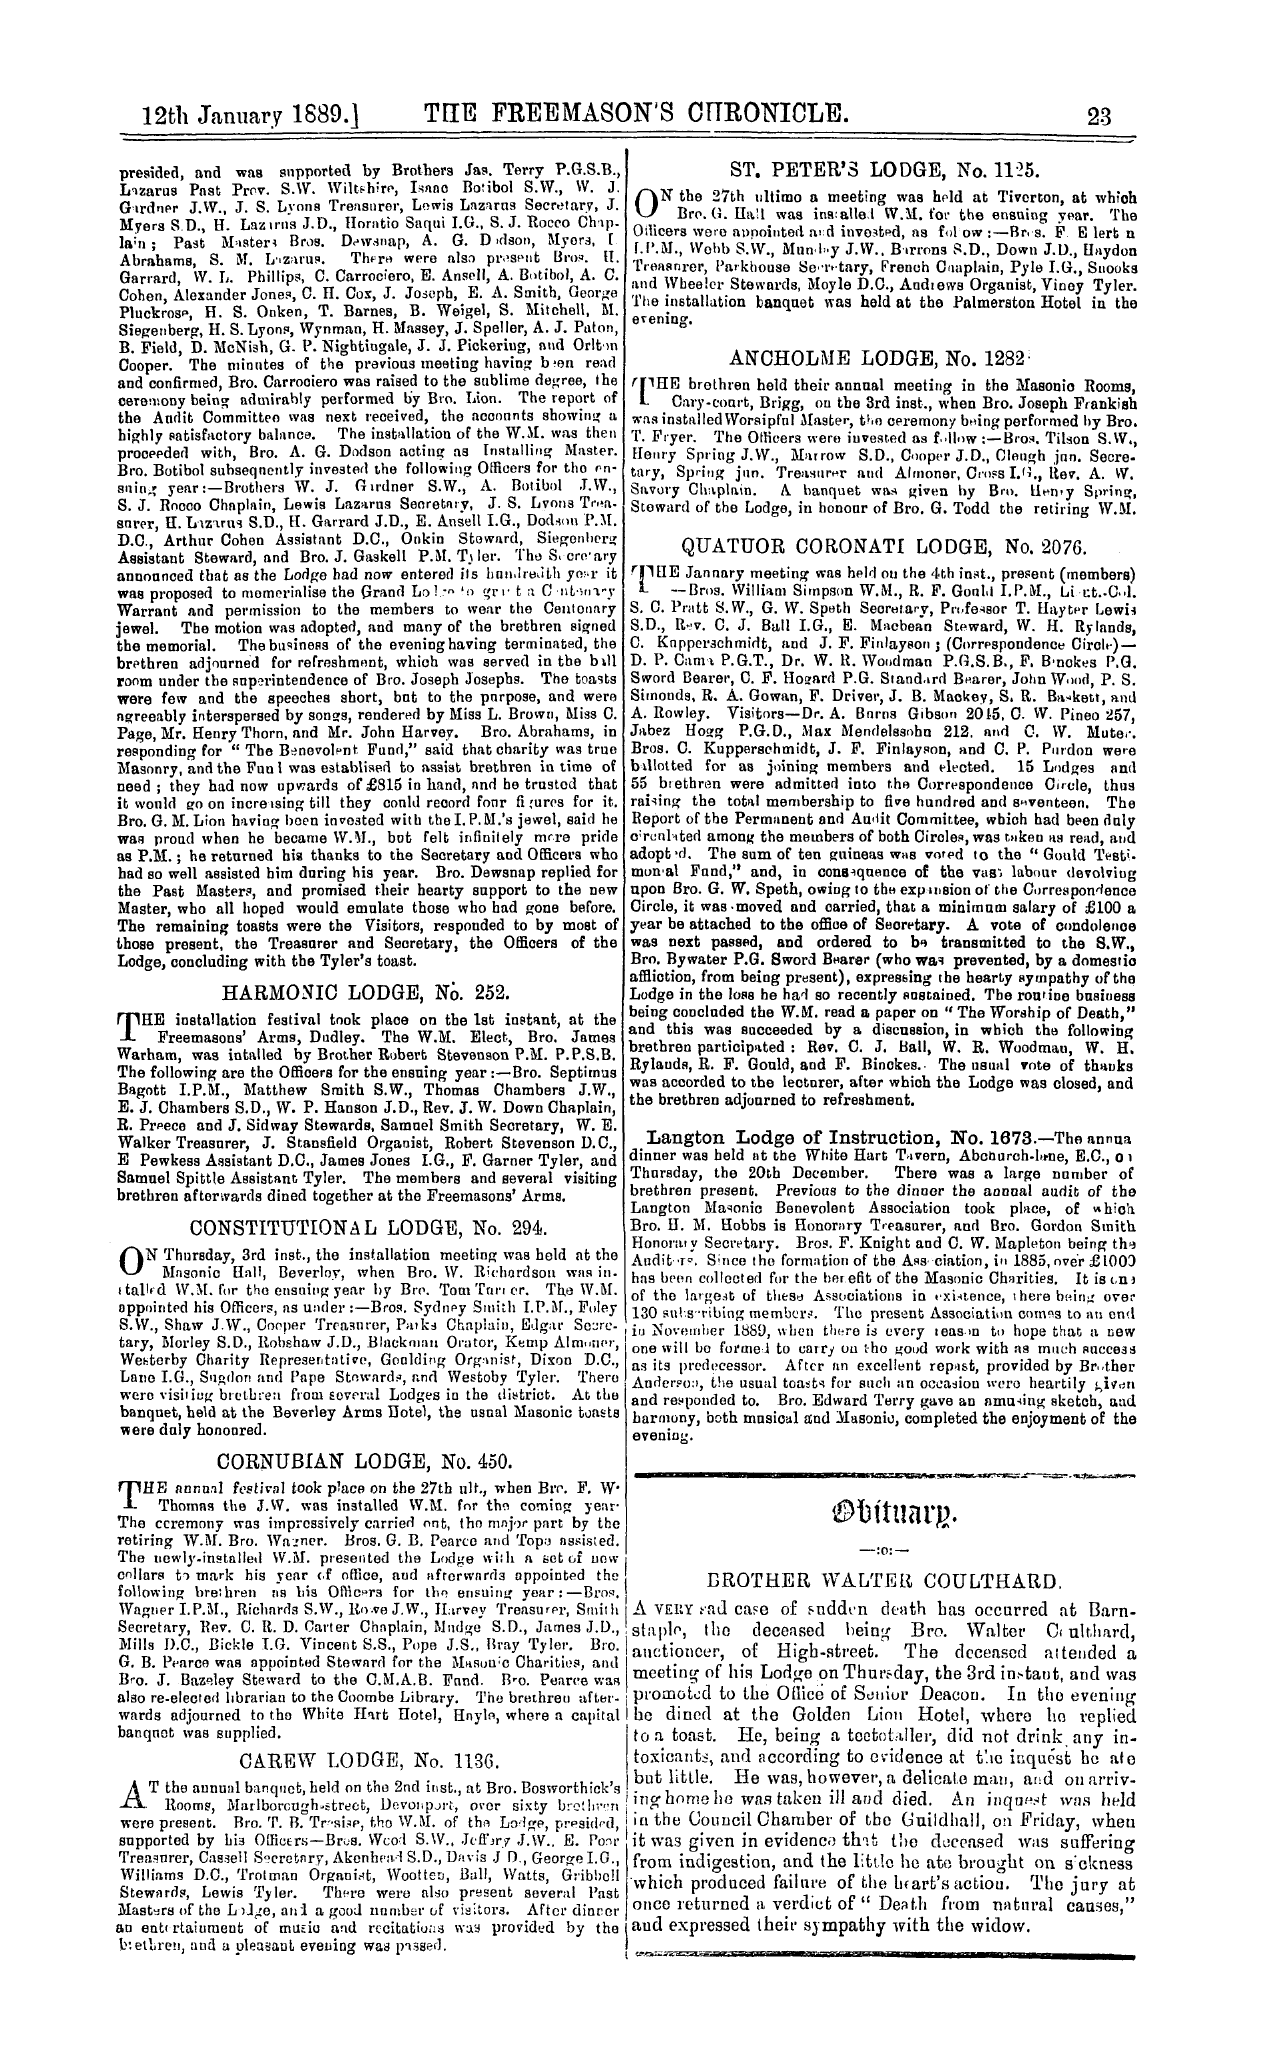 The Freemason's Chronicle: 1889-01-12: 7